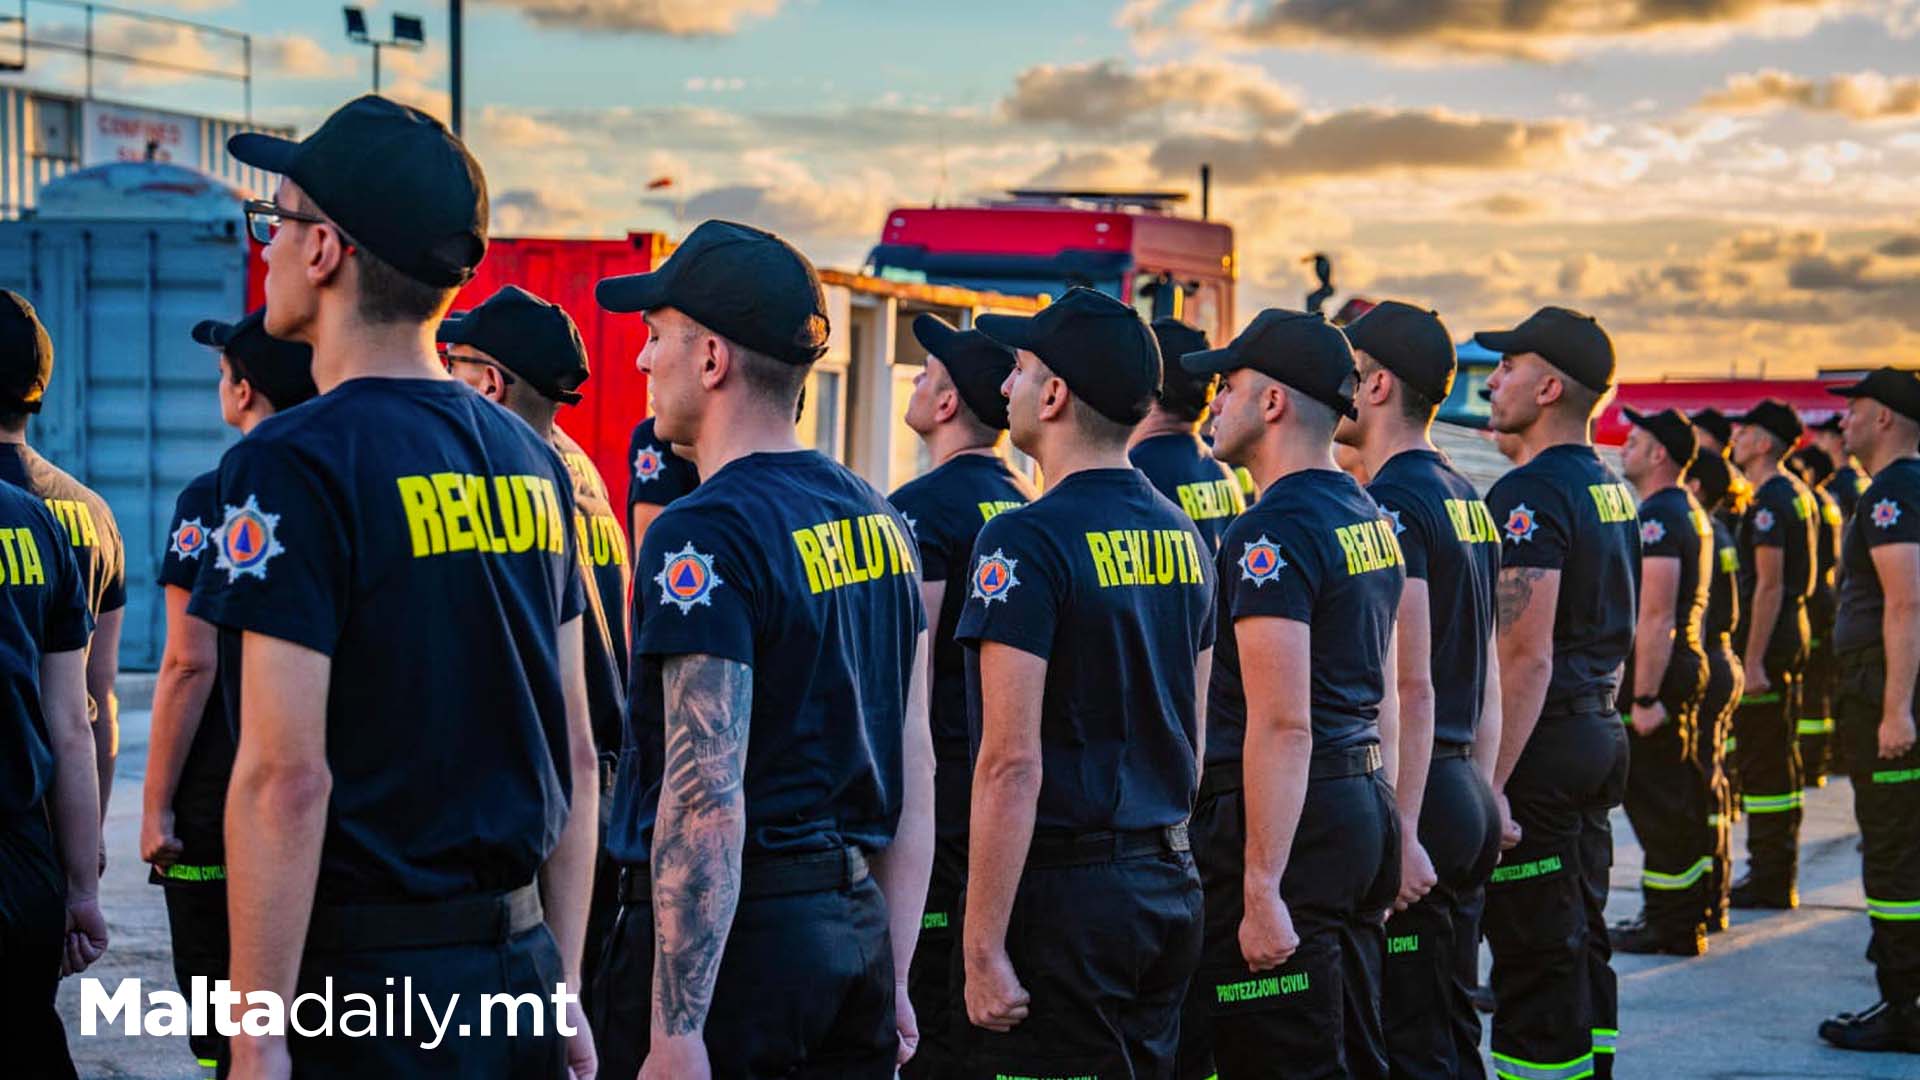 67 New Recruits Join Civil Protection Malta